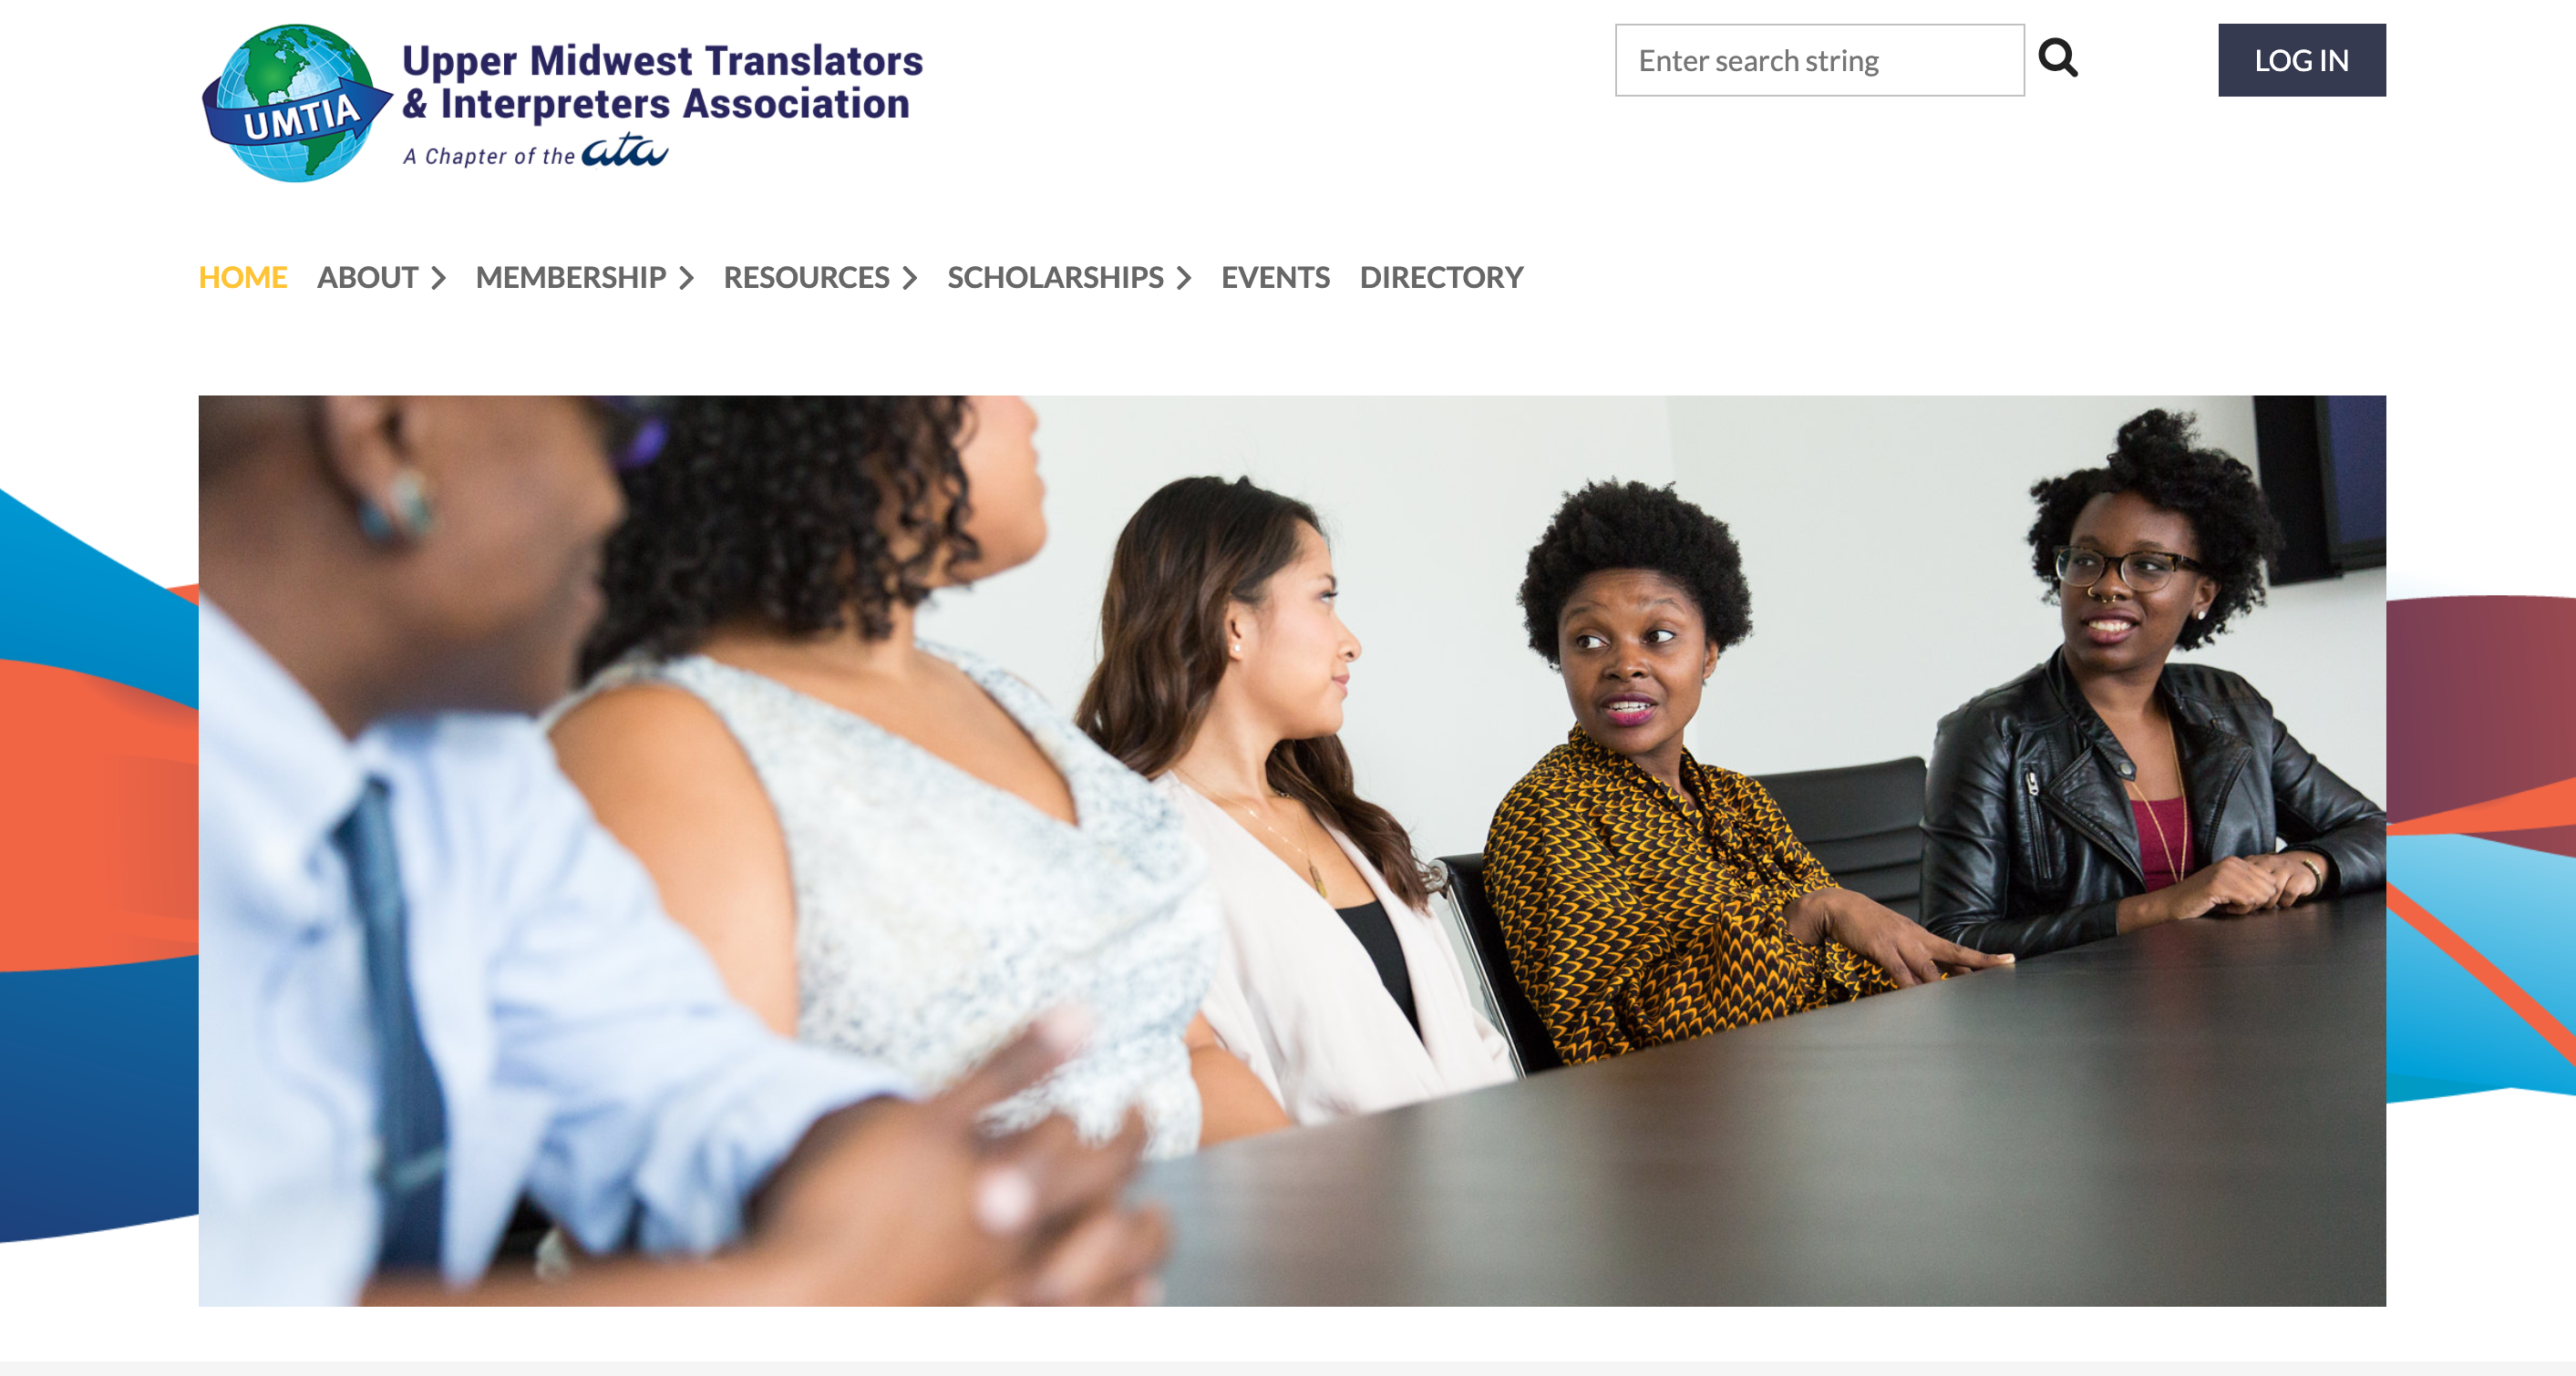 Upper Midwest Translators and Interpreters Association website